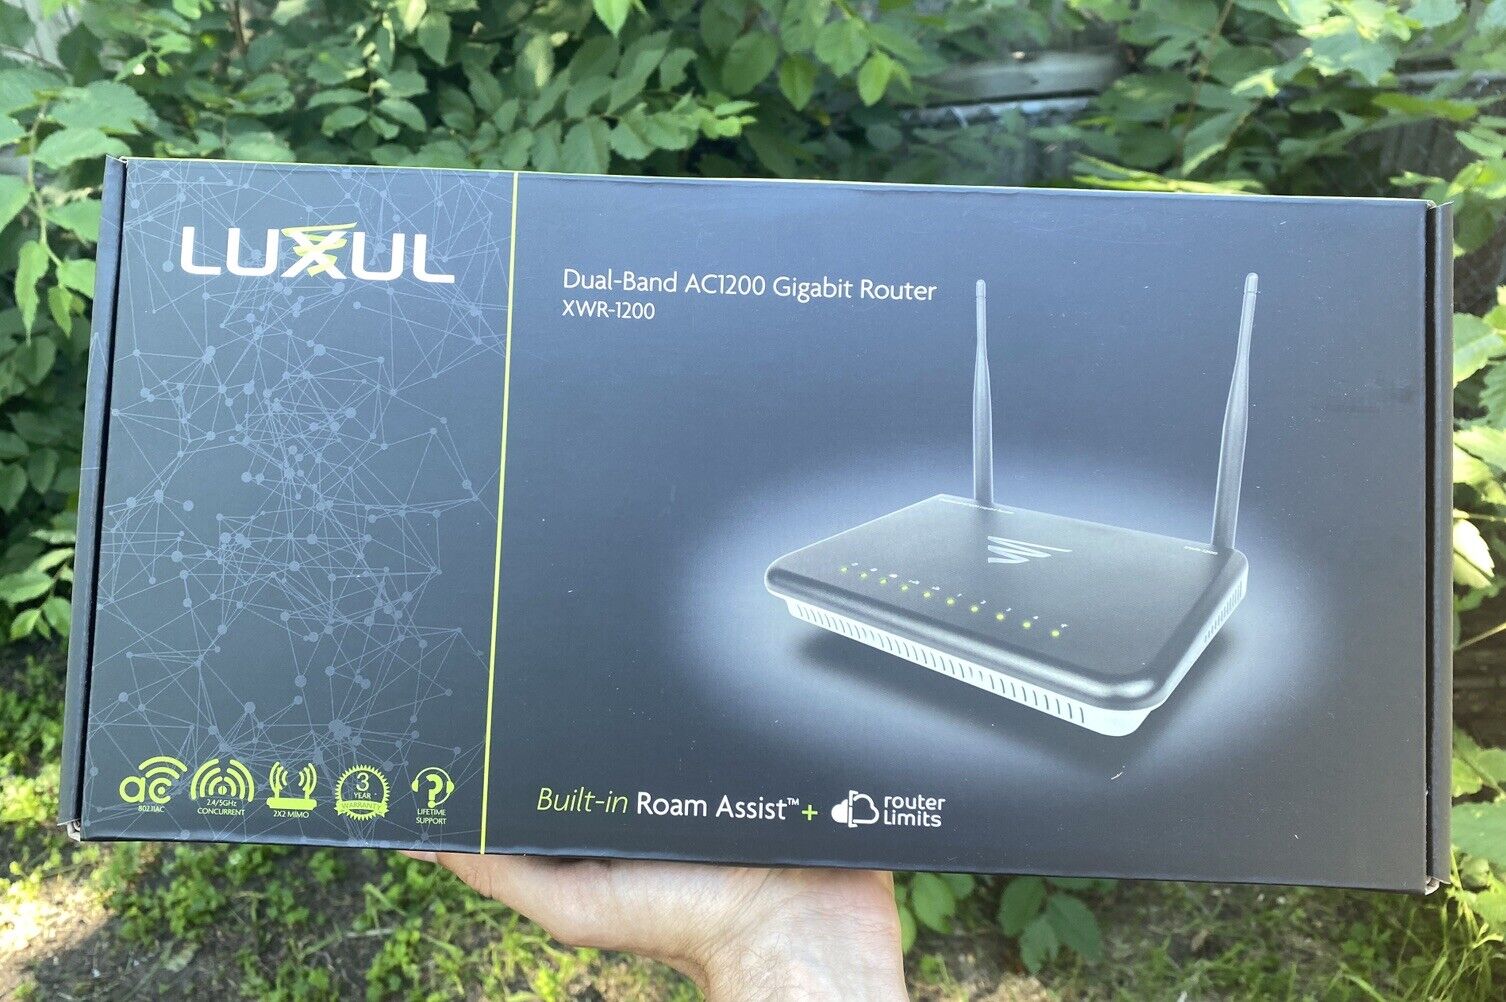 Luxul XWR-1200 Dual-Band AC1200 Gigabit Router 135$ MSRP